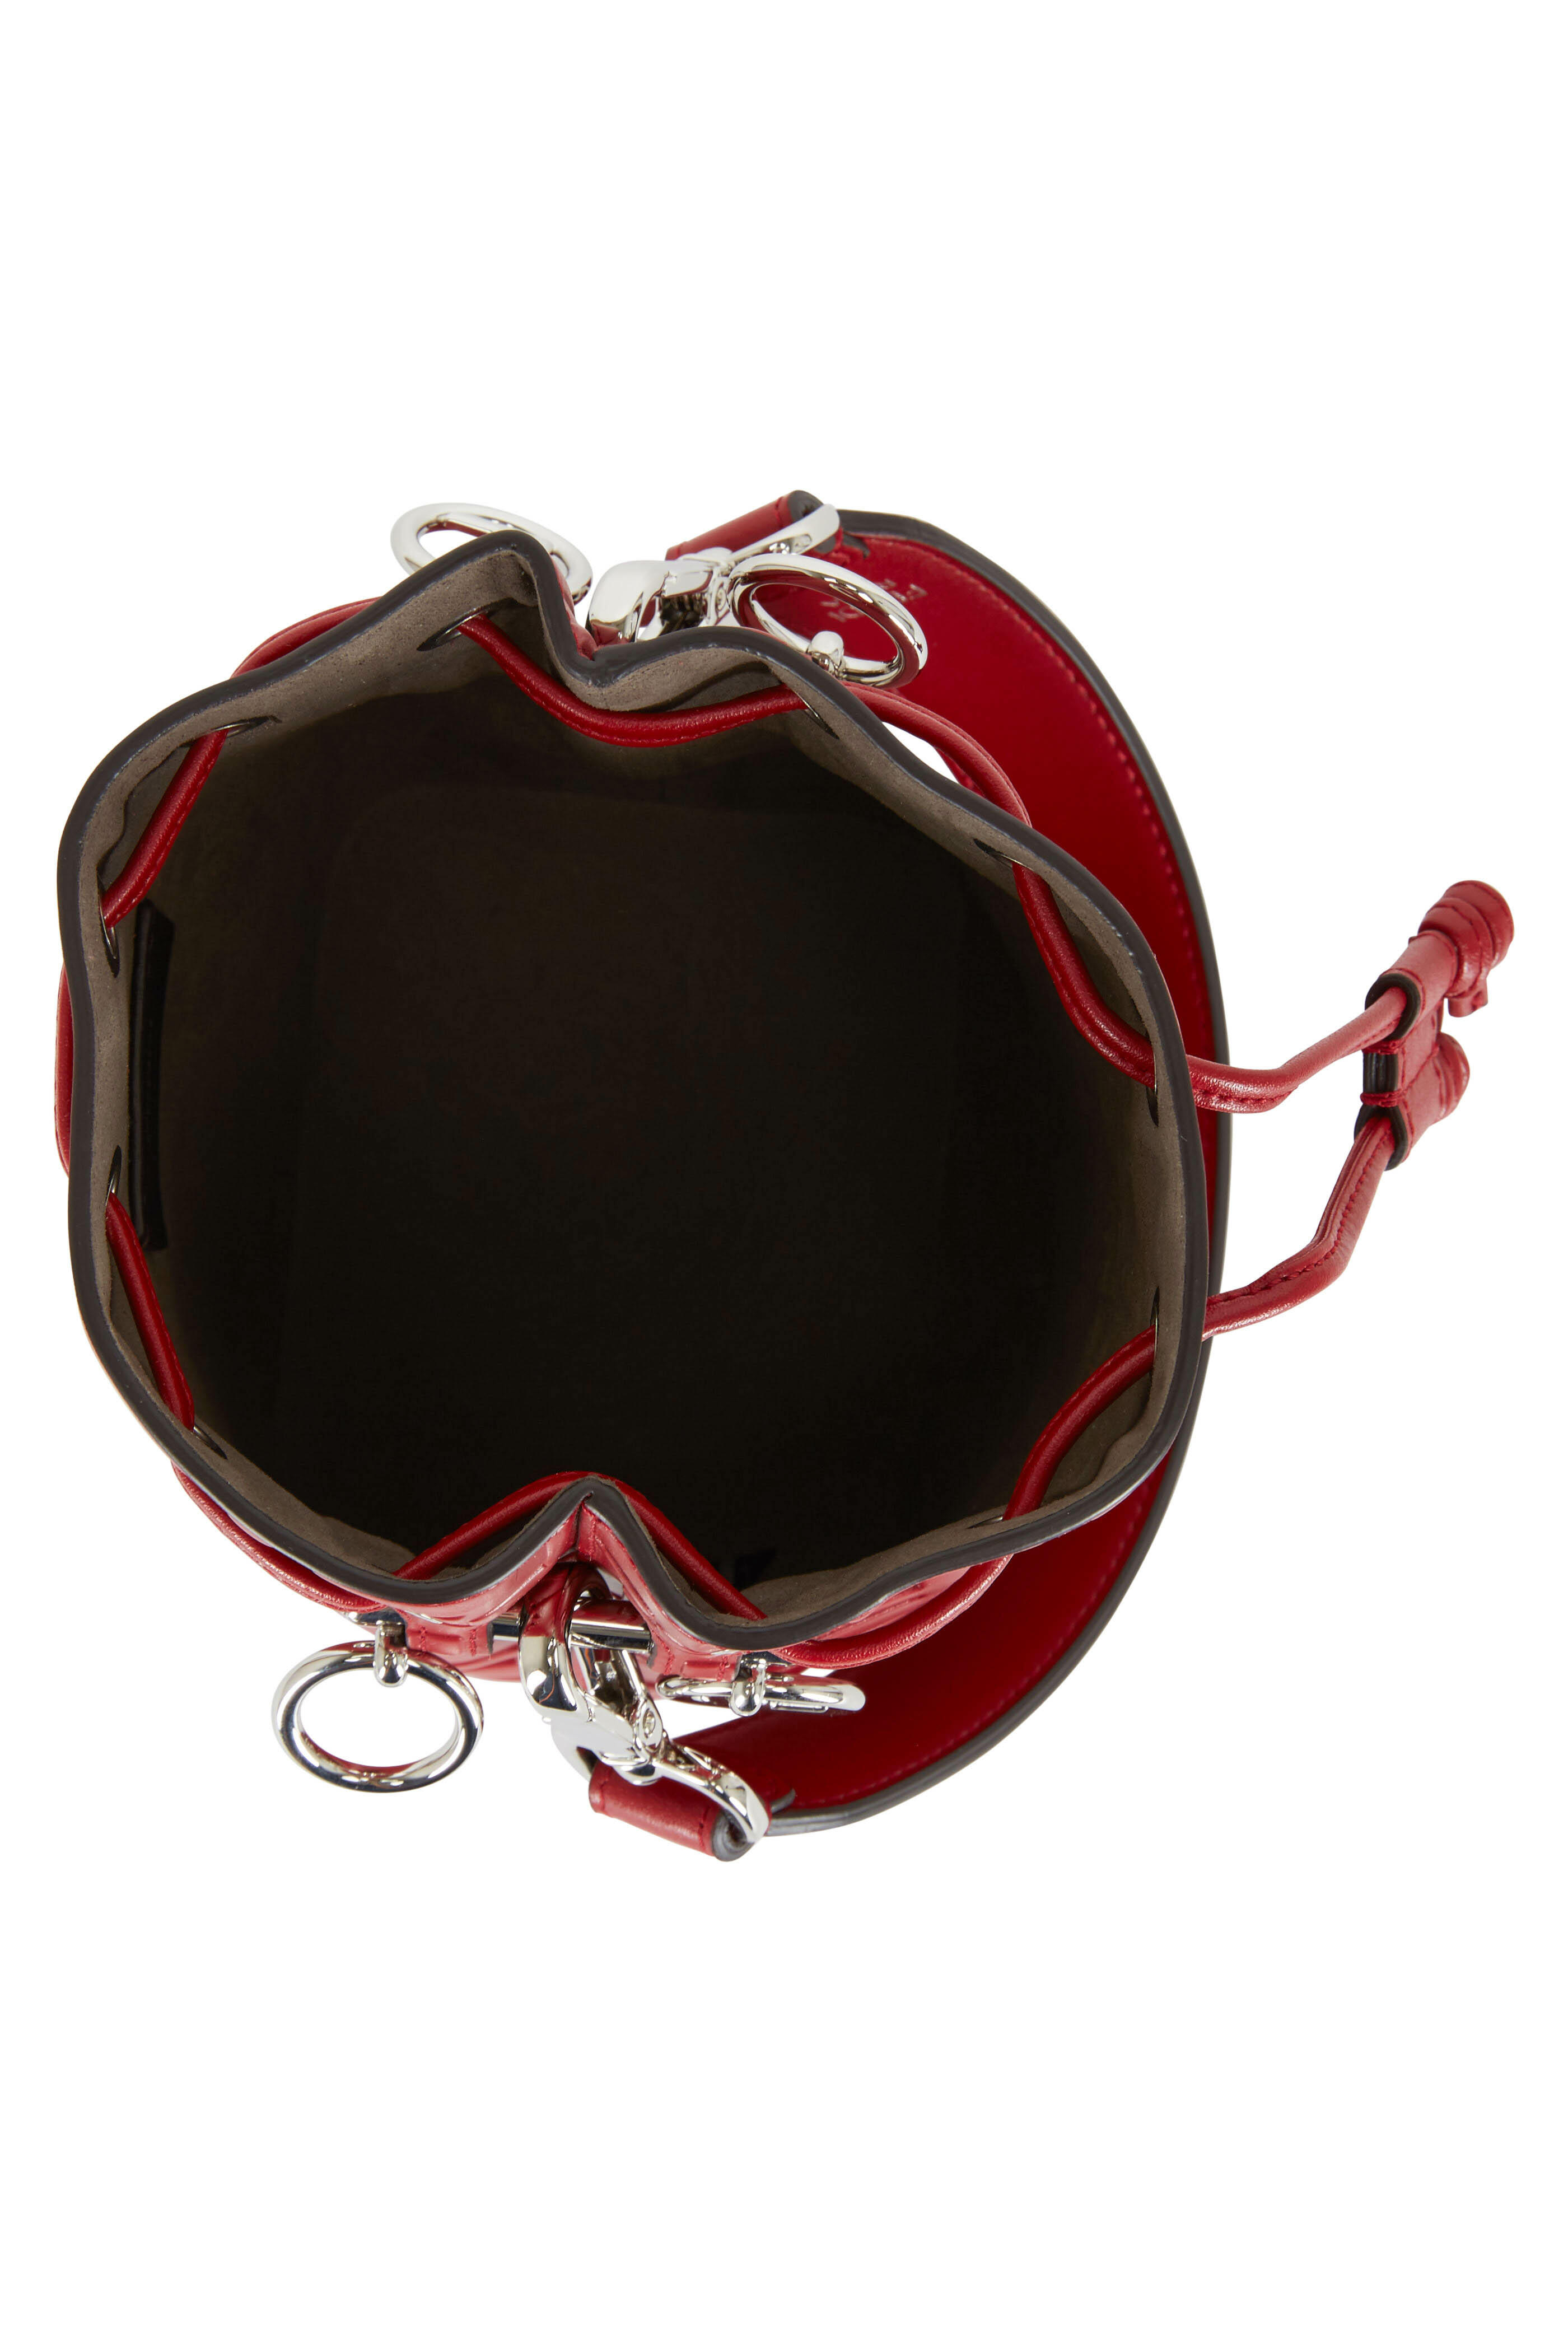 Fendi Mon Tresor Multi Color Bucket Bag (Retail $2290) W/Authenticity